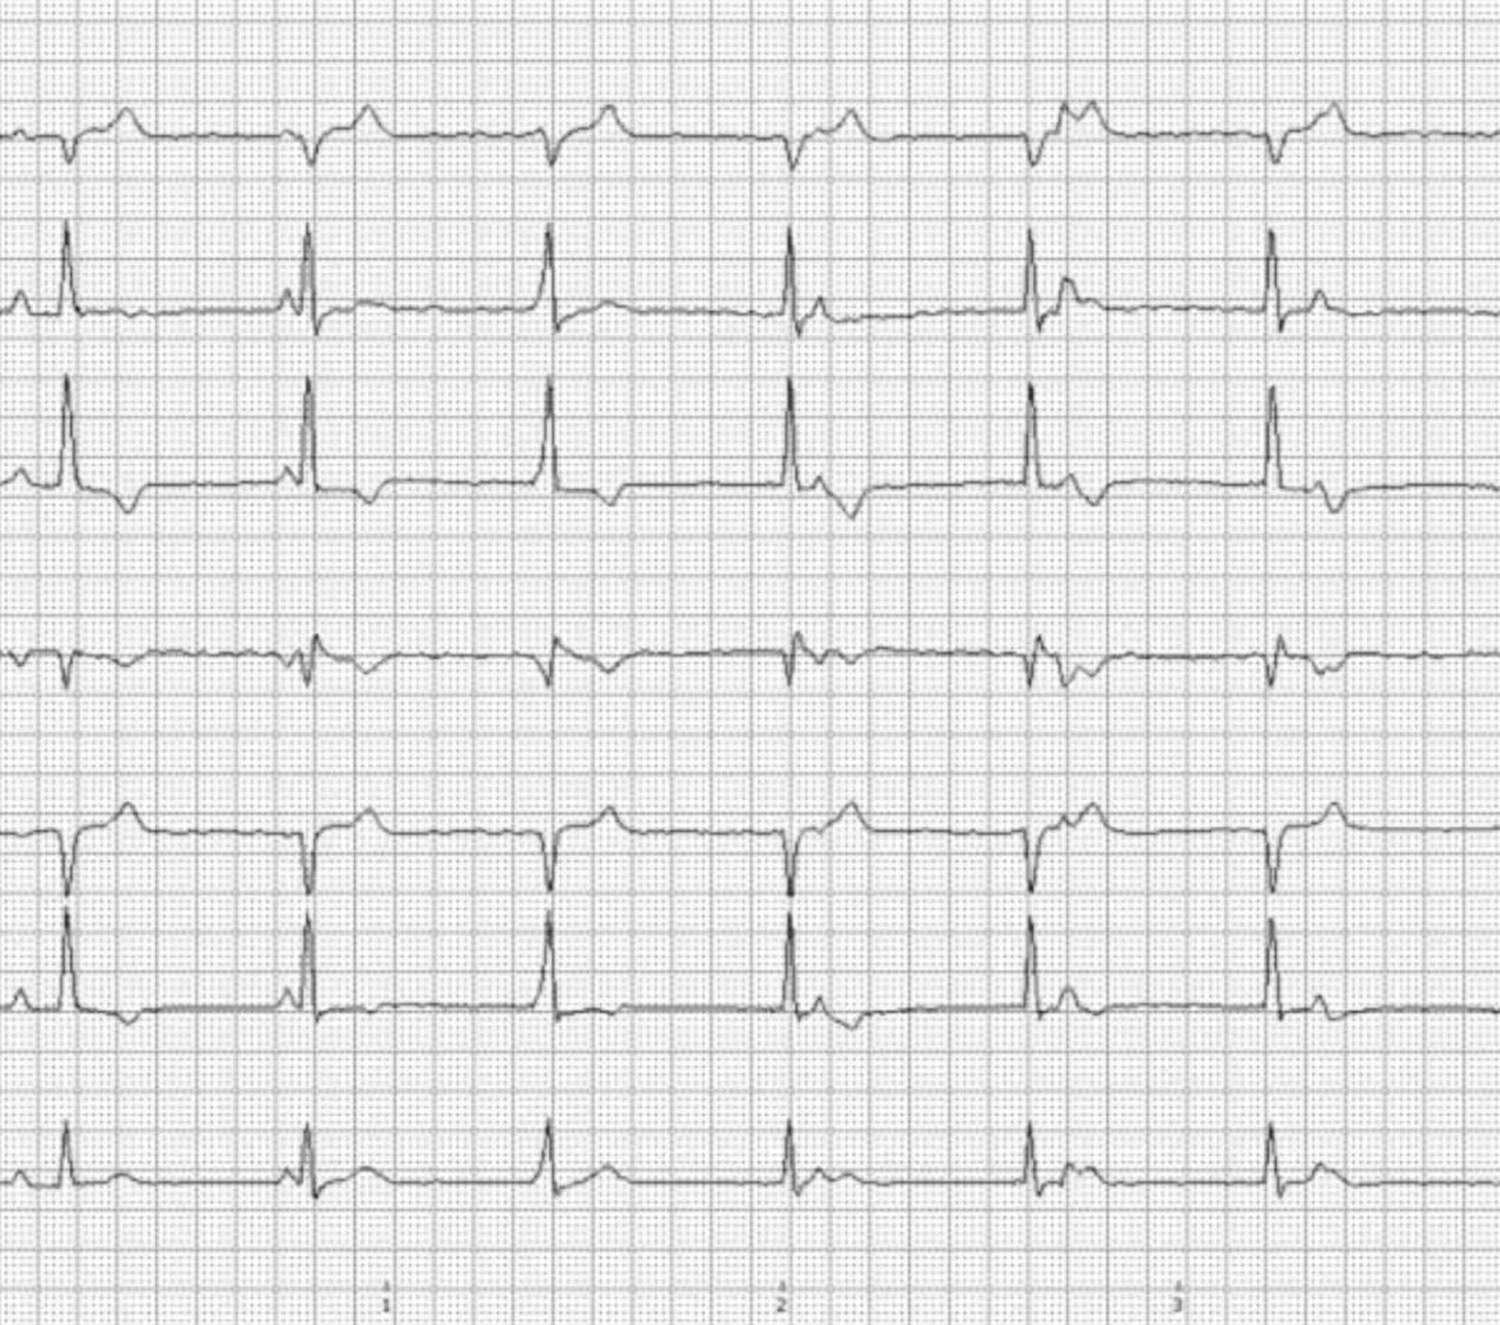 EKG-Diagramm